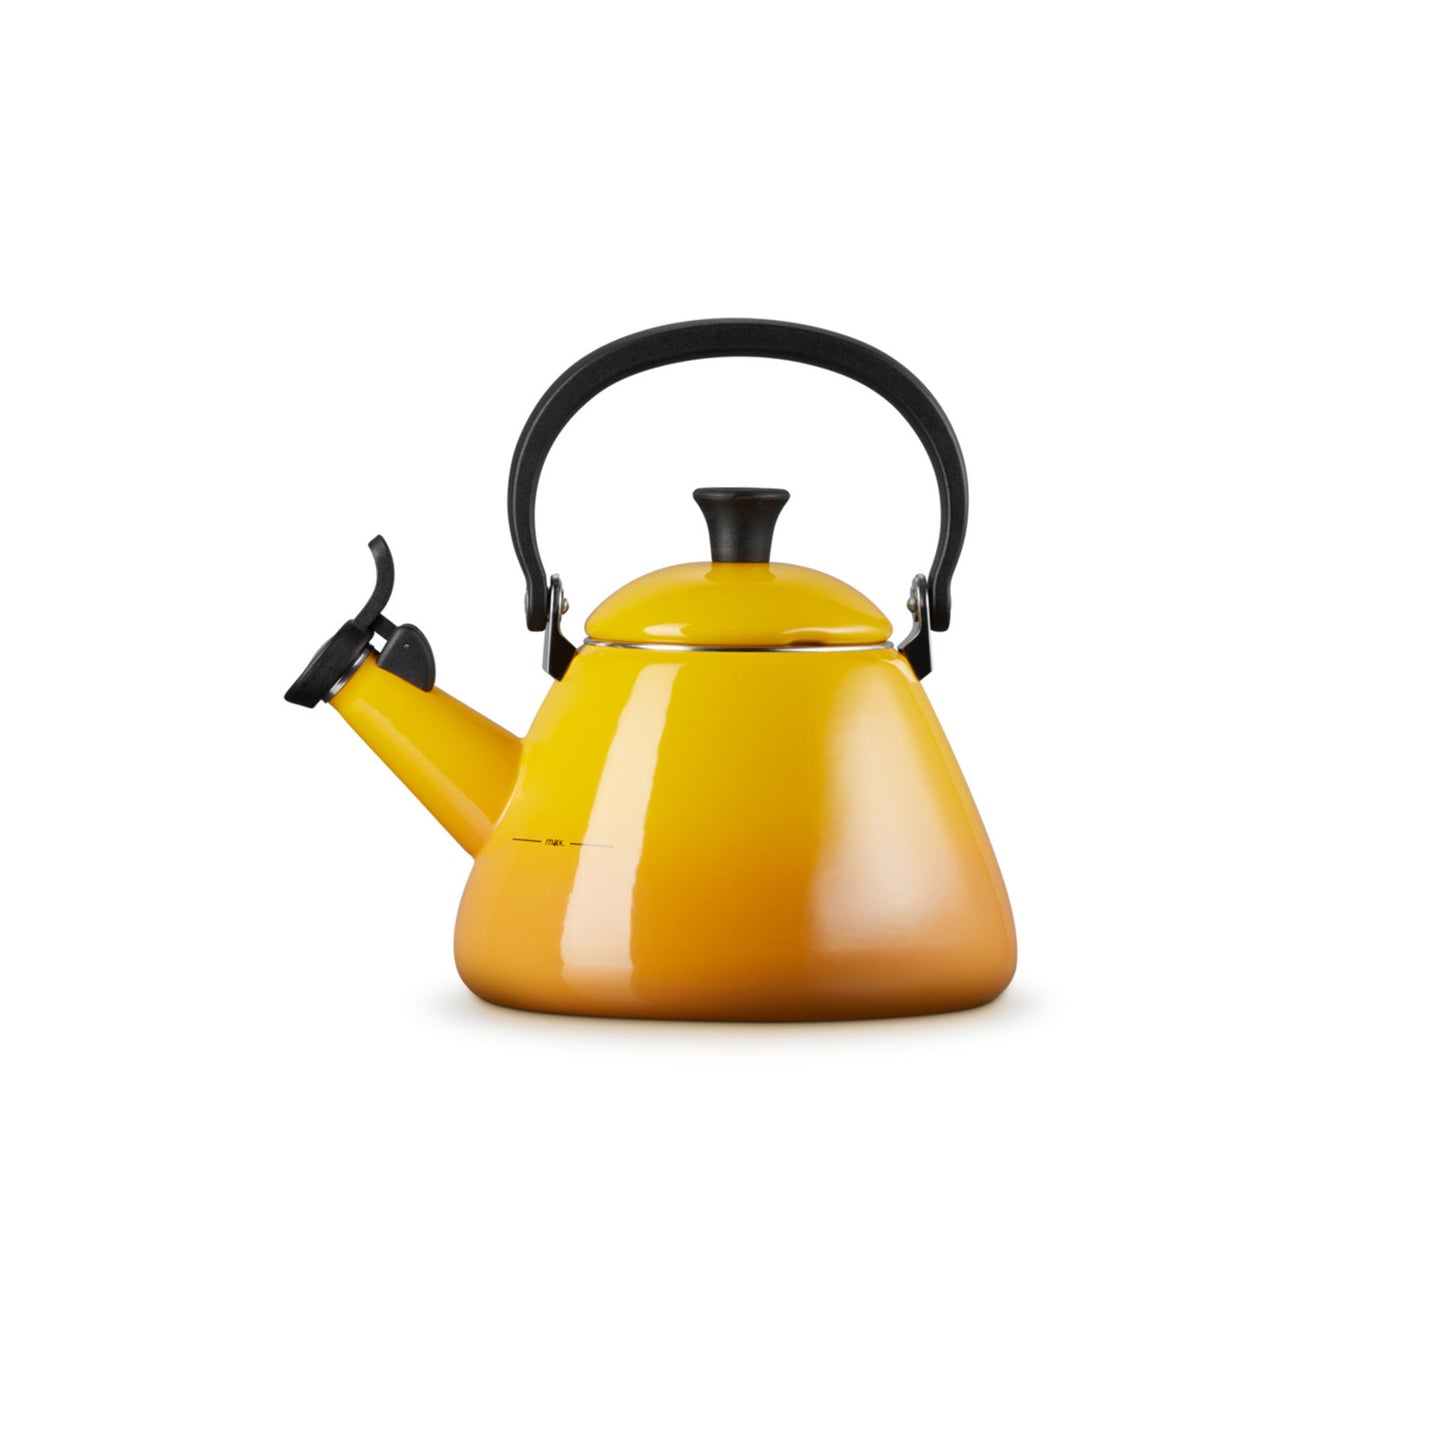 le creuset kone kettle 1.6l in nextar (deep warm yellow shade) 